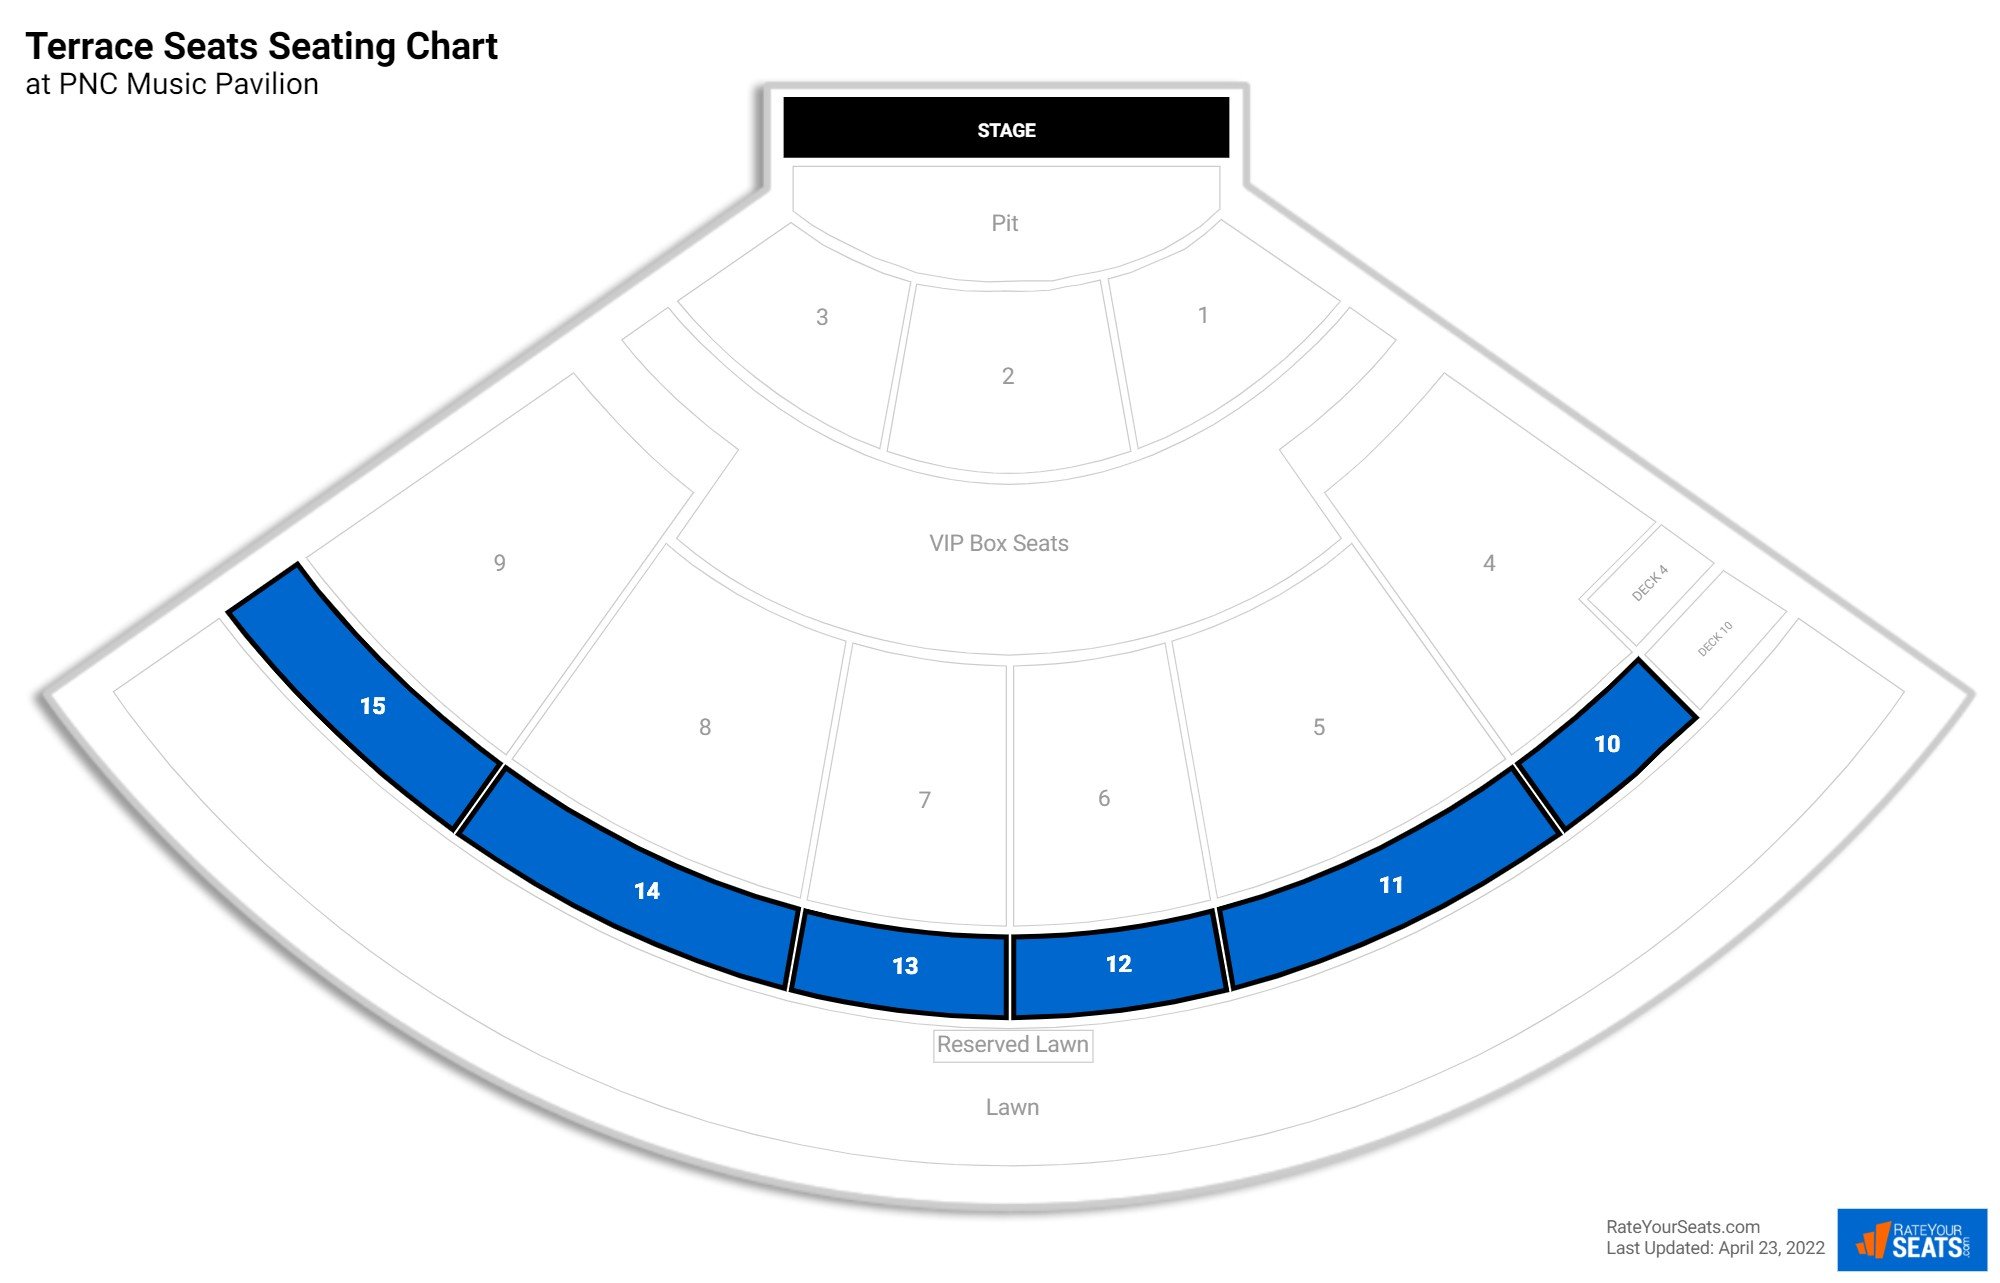 Concert Terrace Seats Seating Chart at PNC Music Pavilion